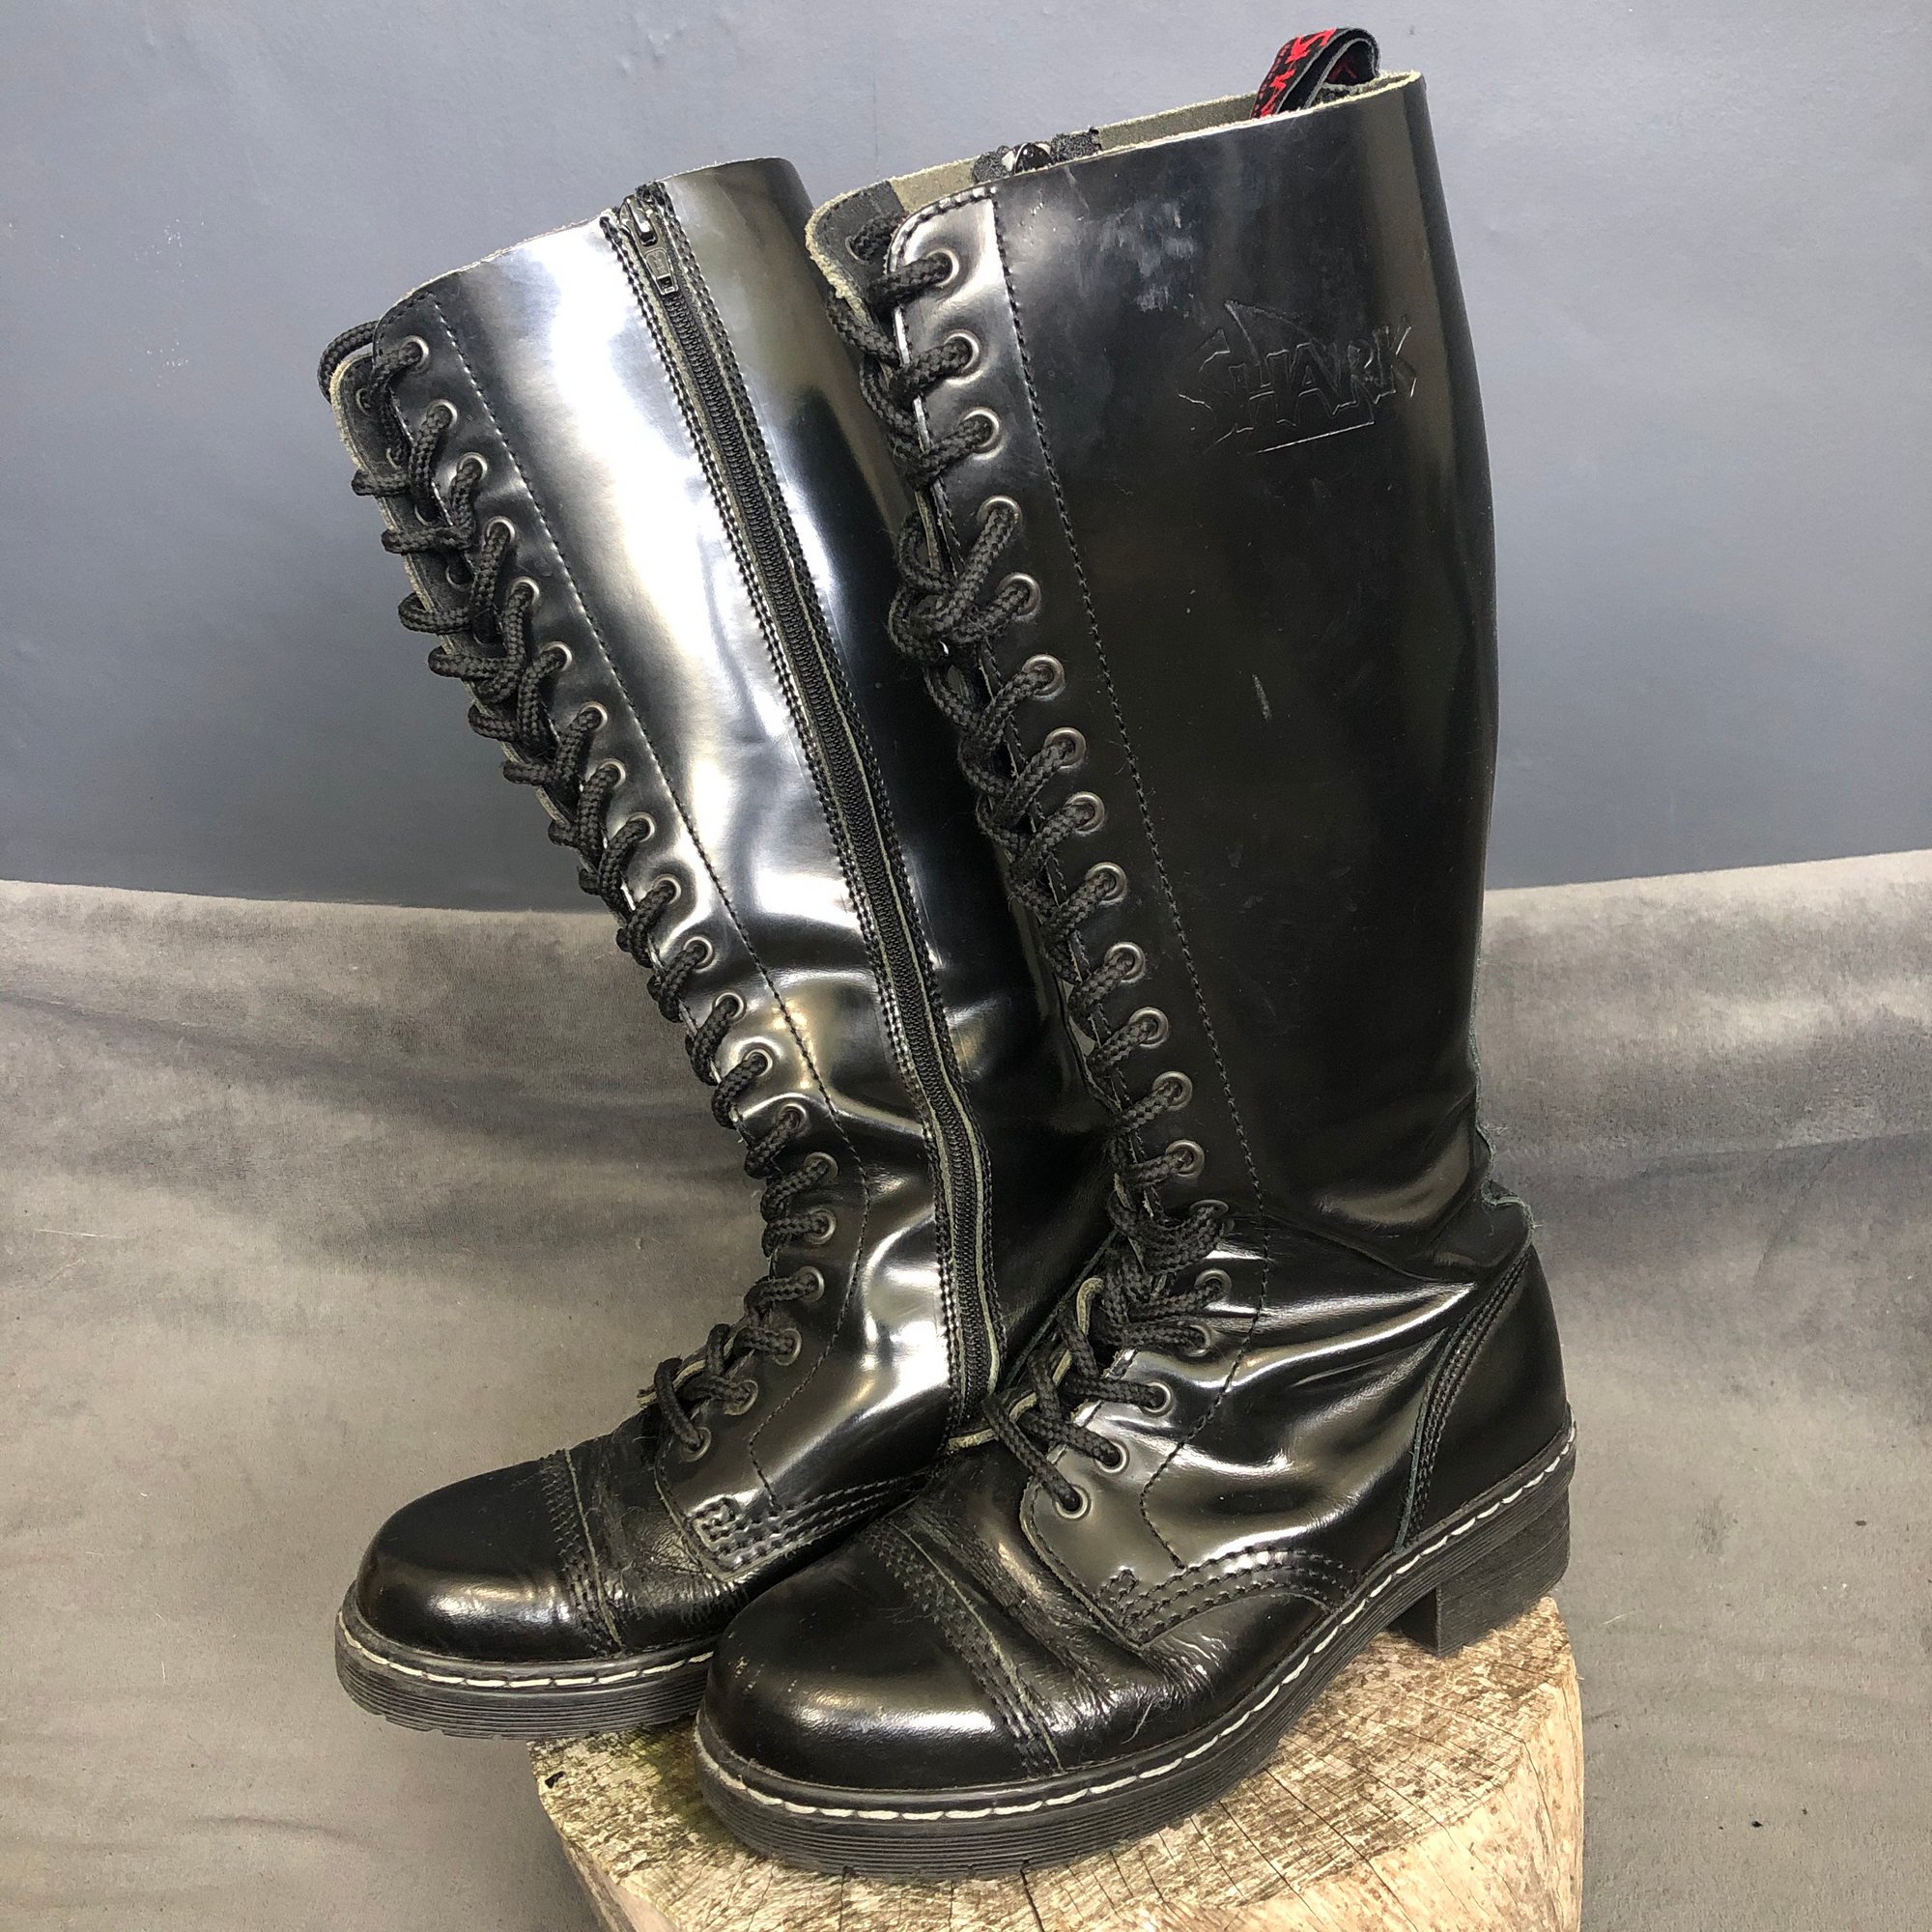 Vintage Shark Punk Boots in Patent Black Leather - Size UK5/EU38 - Vintique Clothing